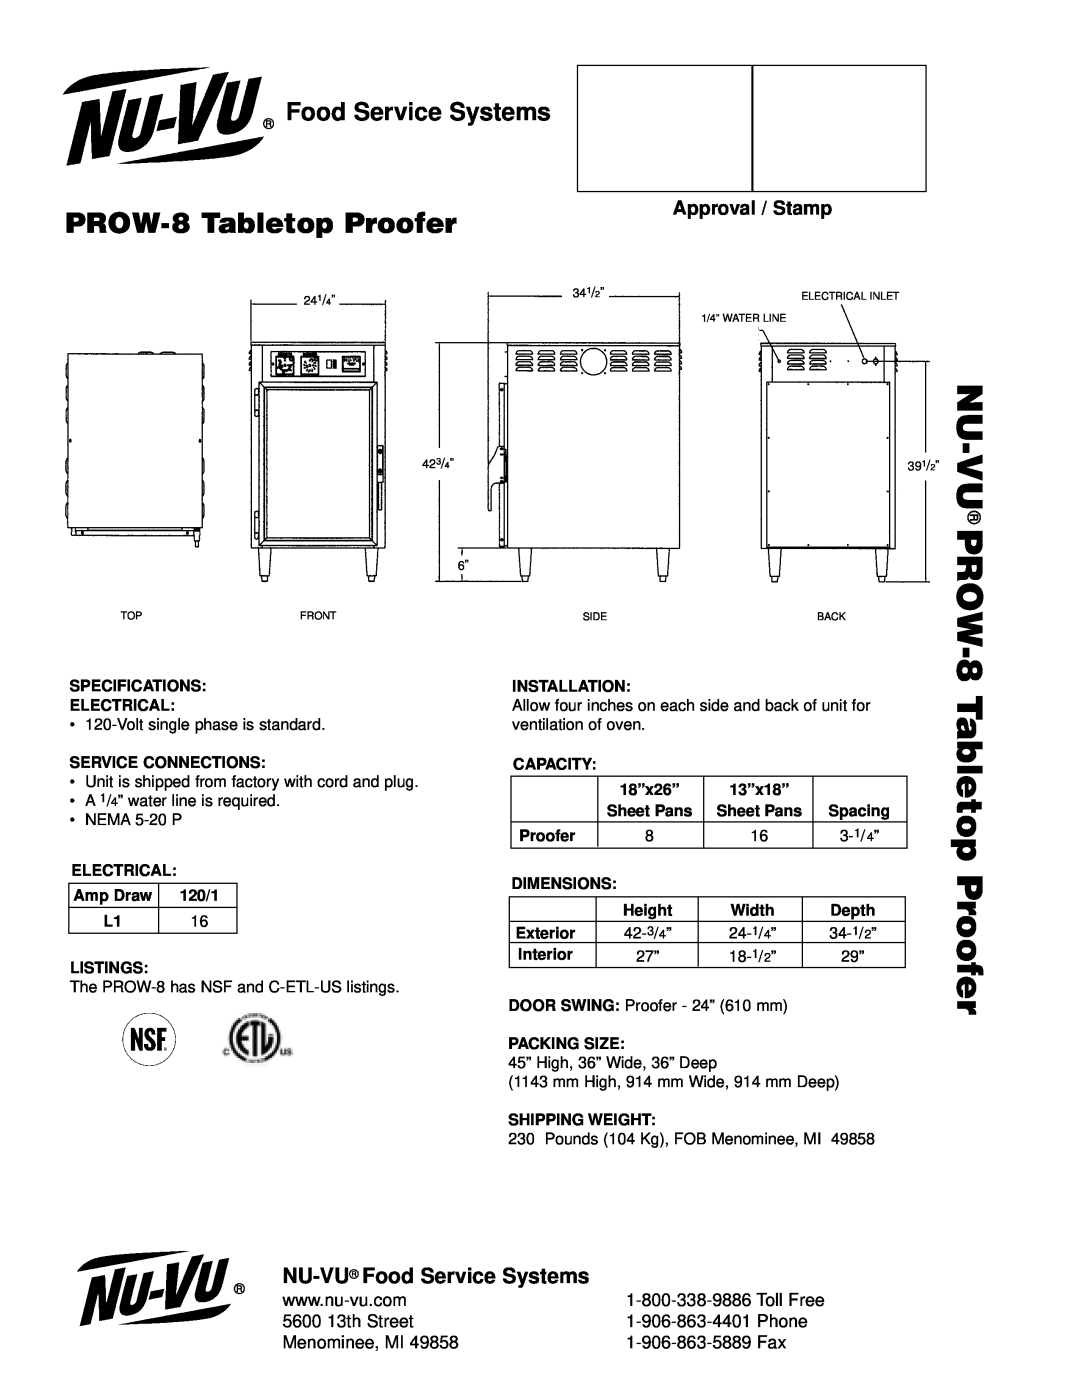 Nu-Vu NU-VU PROW-8Tabletop Proofer, NU-VU Food Service Systems, Approval / Stamp, 5600 13th Street, 1-906-863-4401 